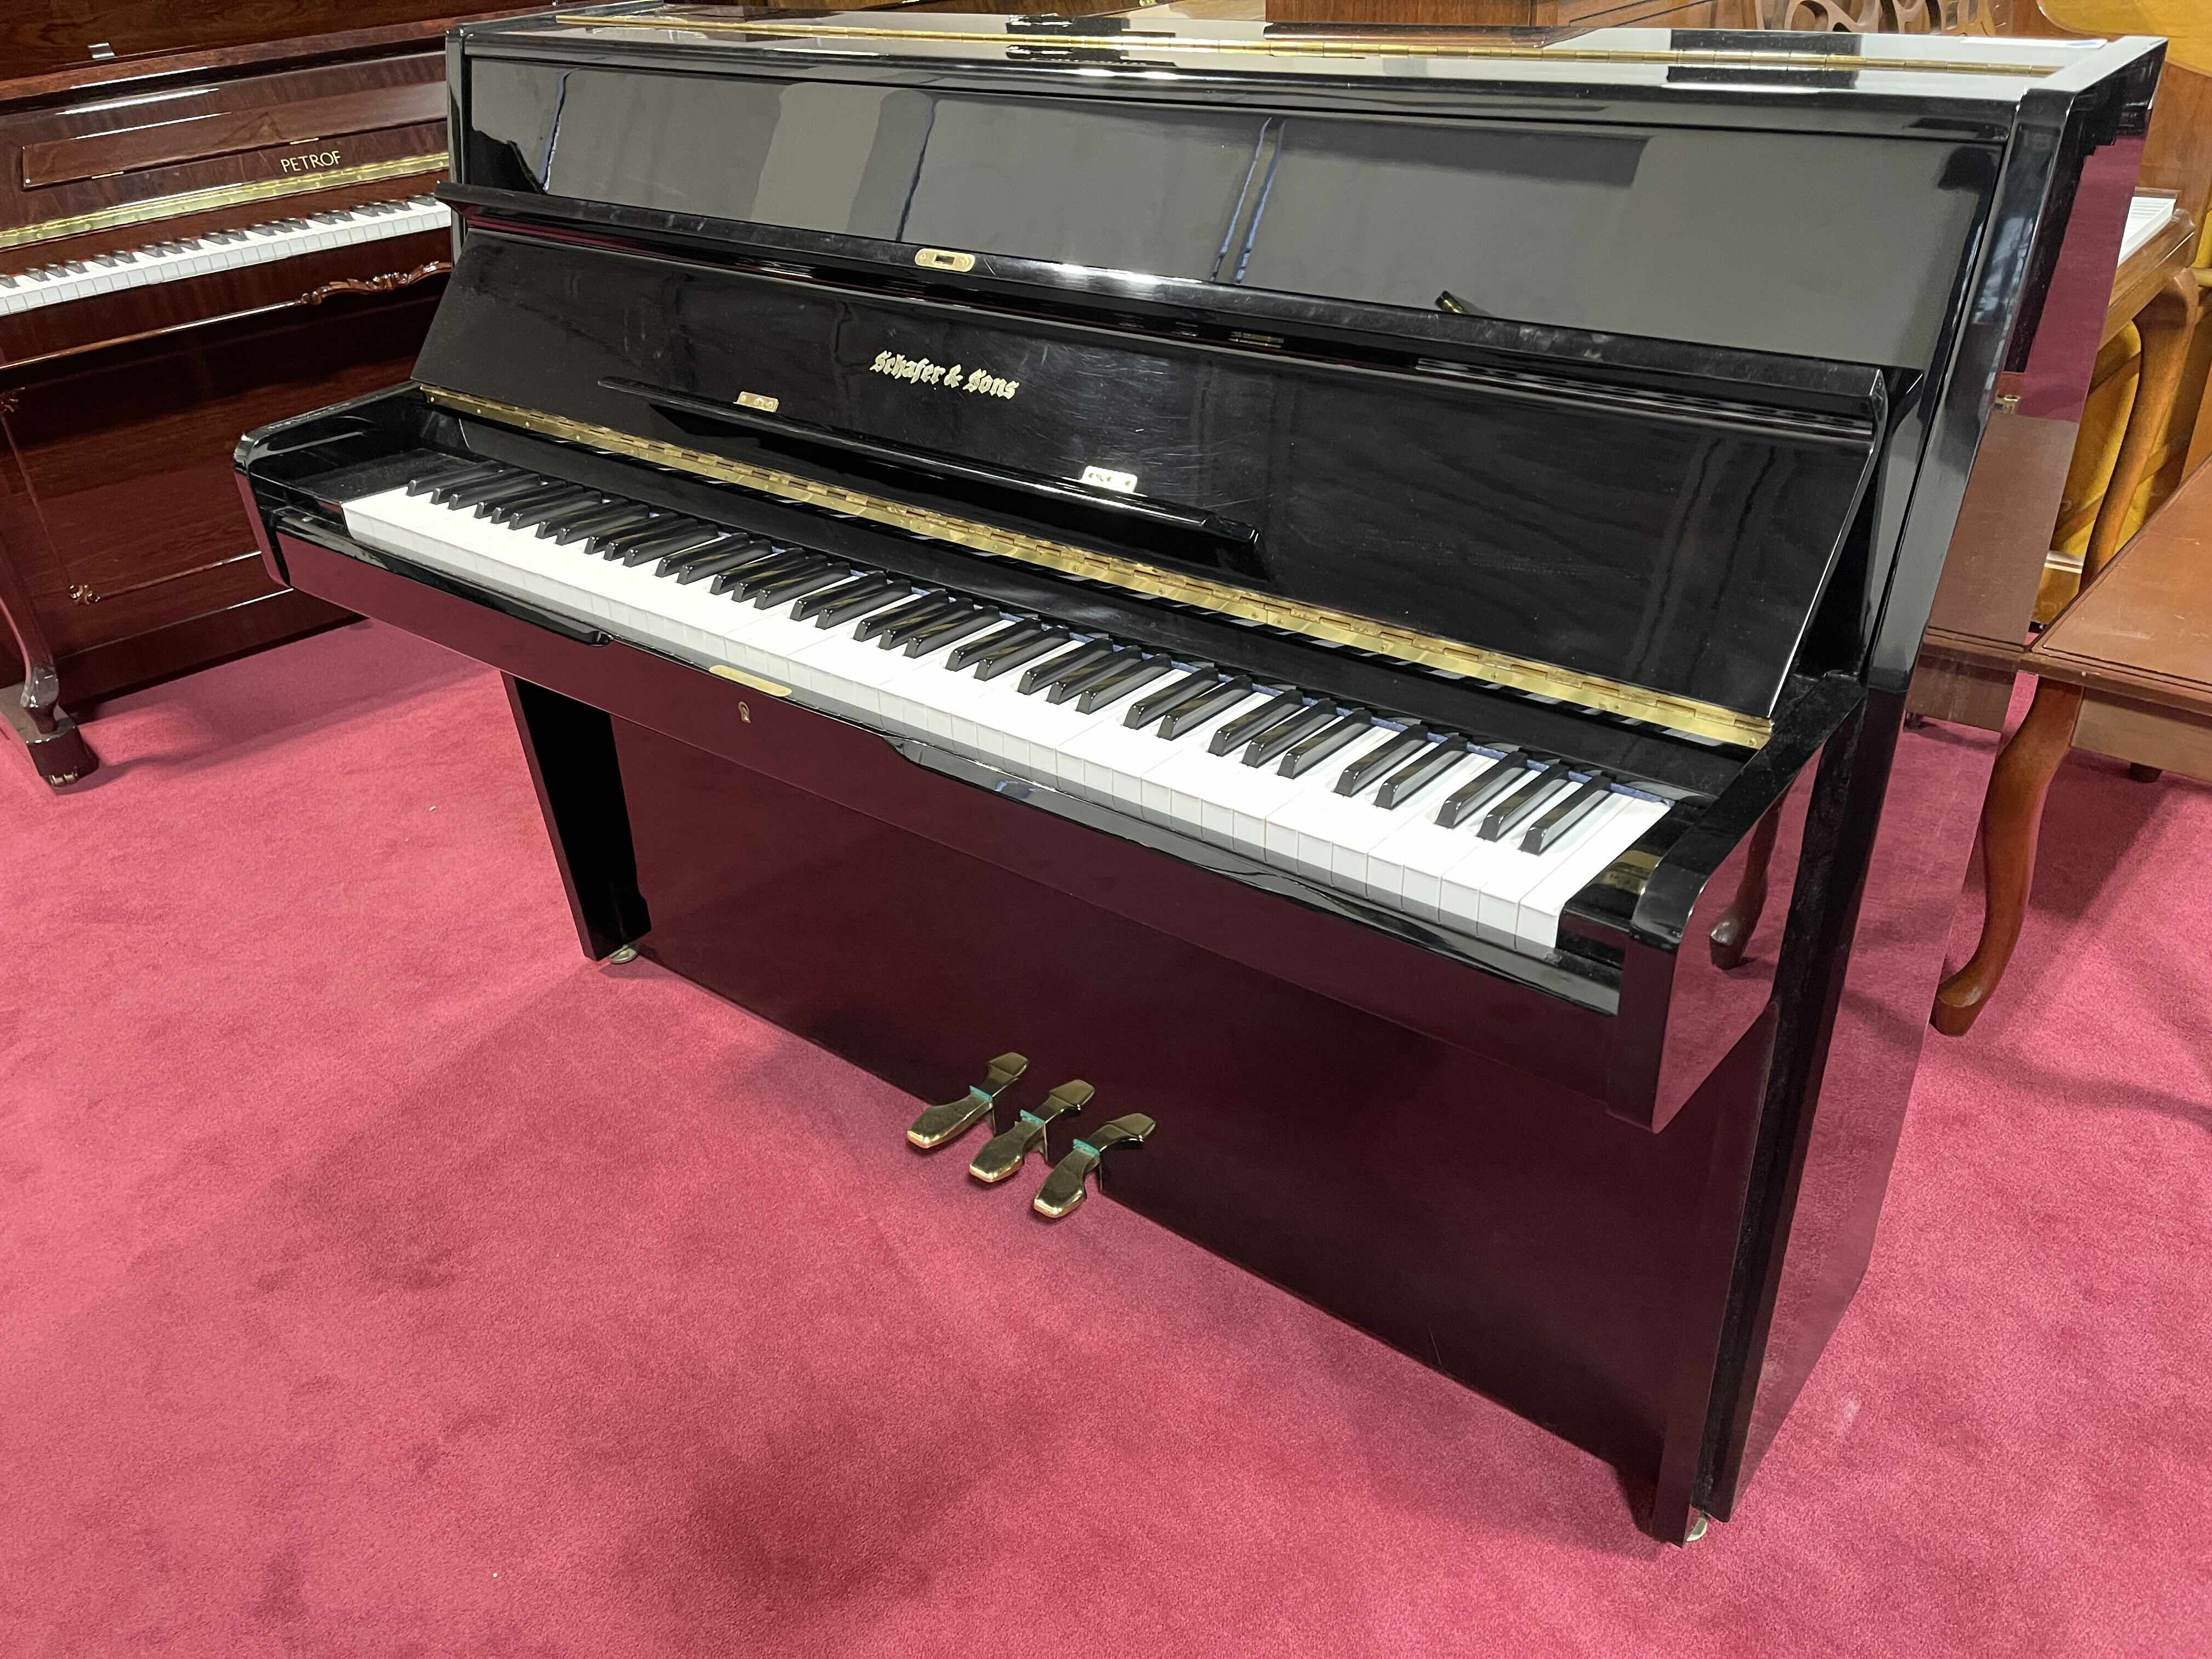 Schafer & Sons VS-42 professional console piano